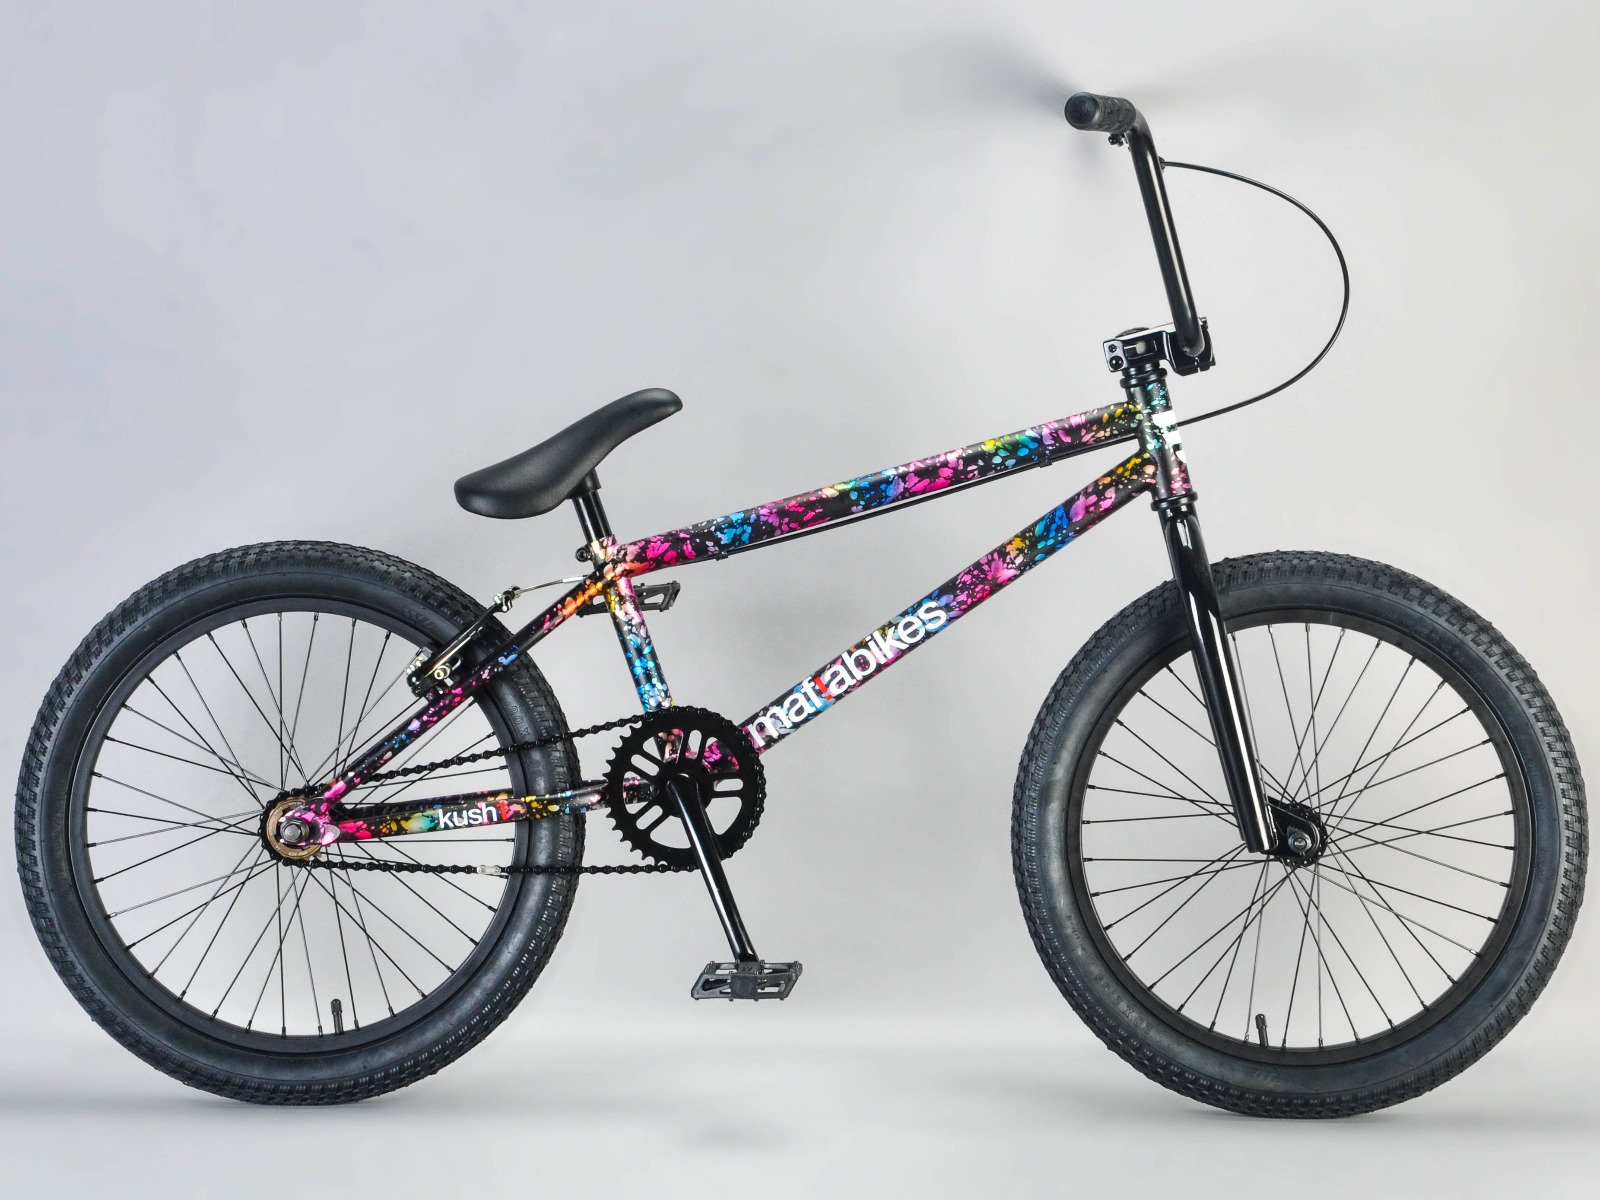 bike for baby girl price